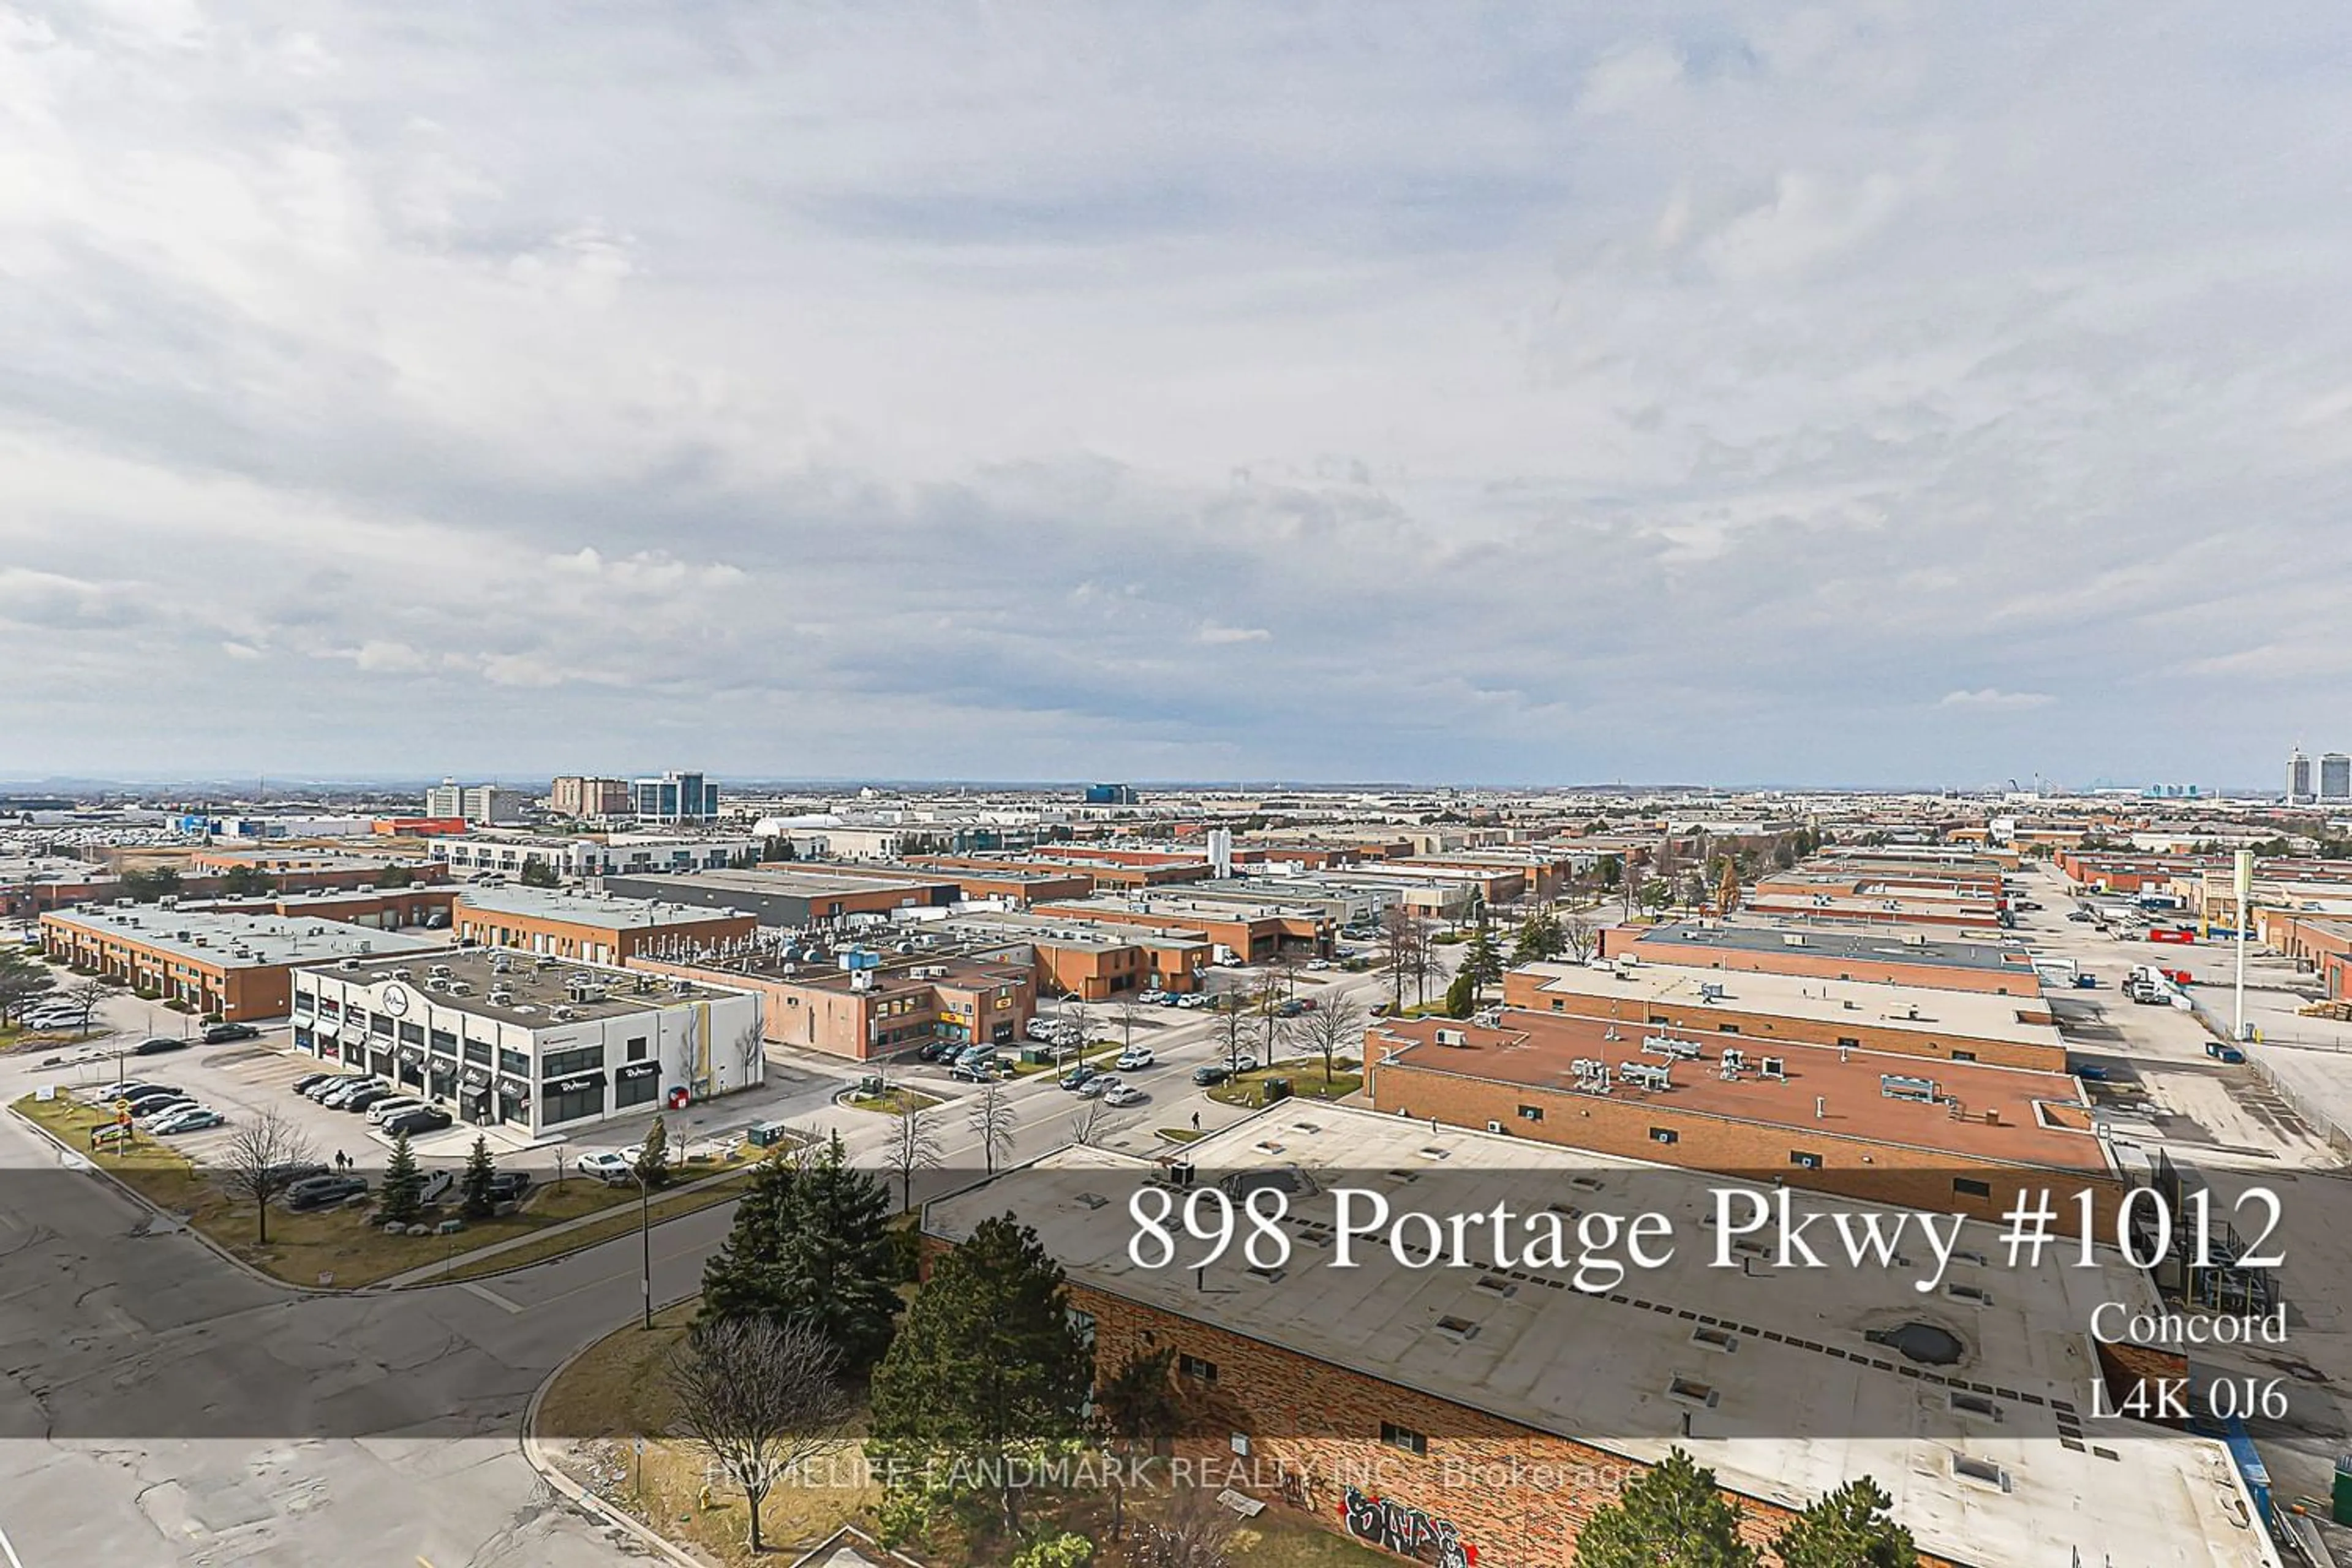 Street view for 898 Portage Pkwy #1012, Vaughan Ontario L4K 0J6